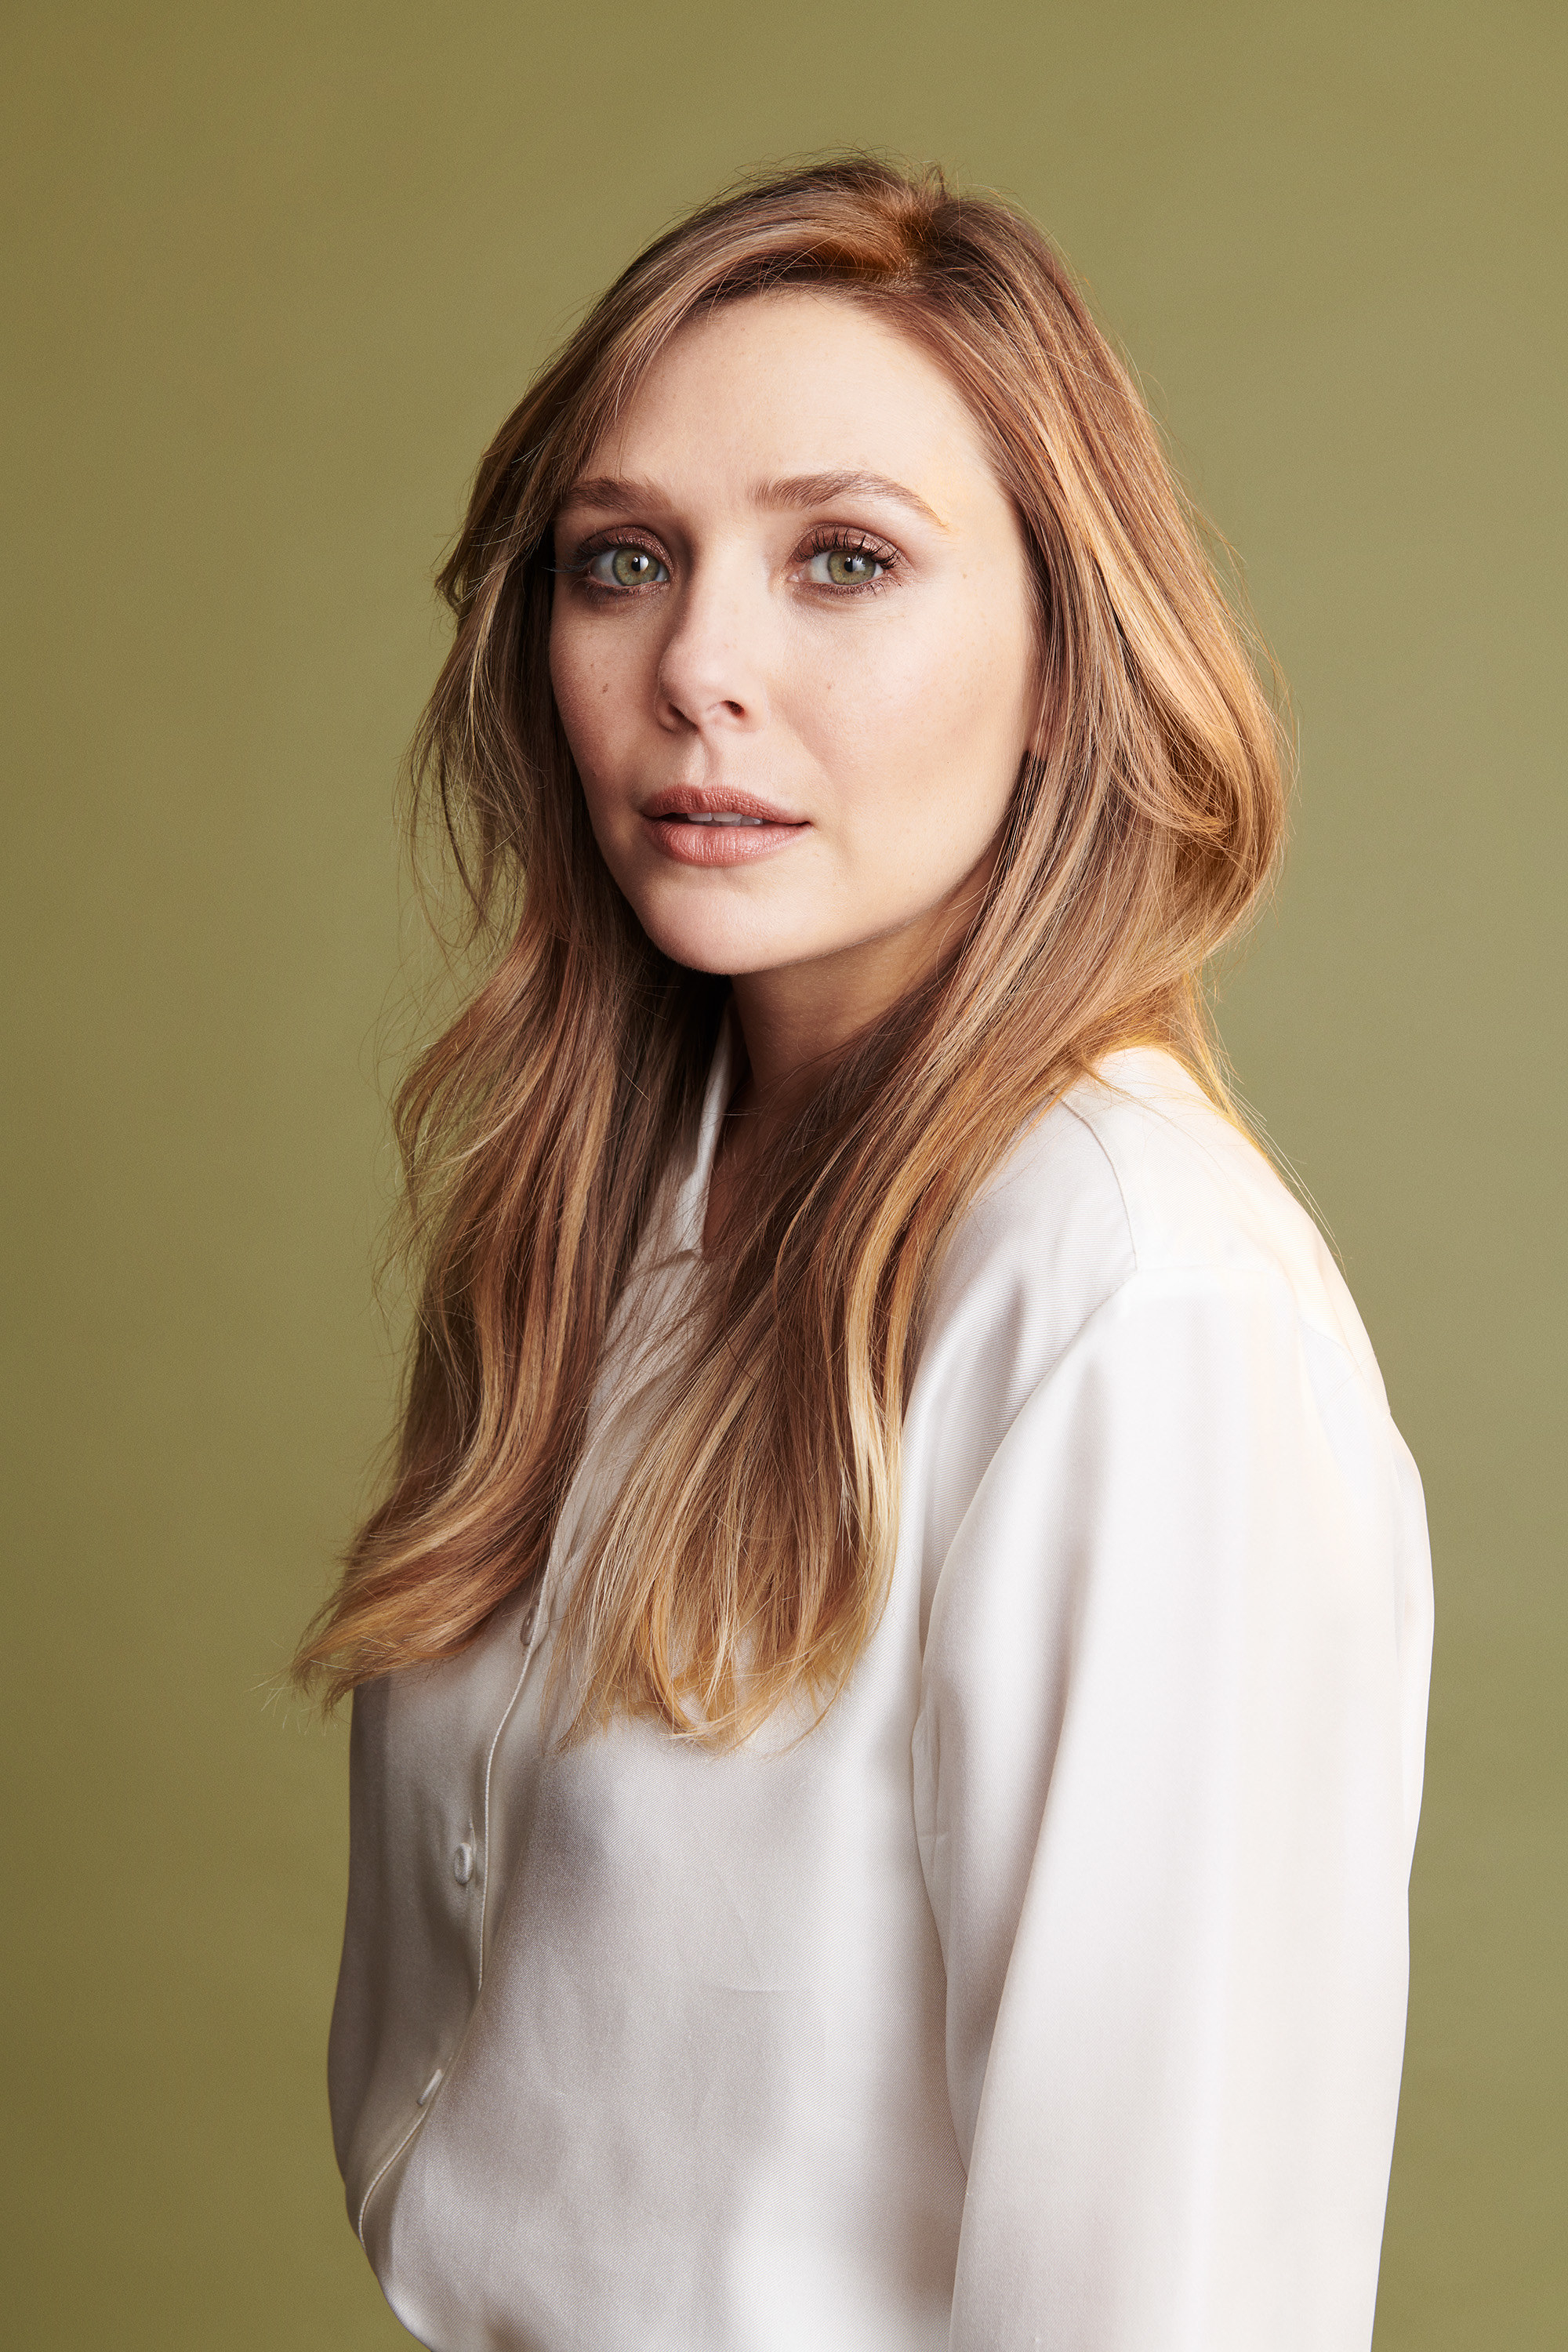 Elizabeth Olsen 2019 Portrait Wallpapers